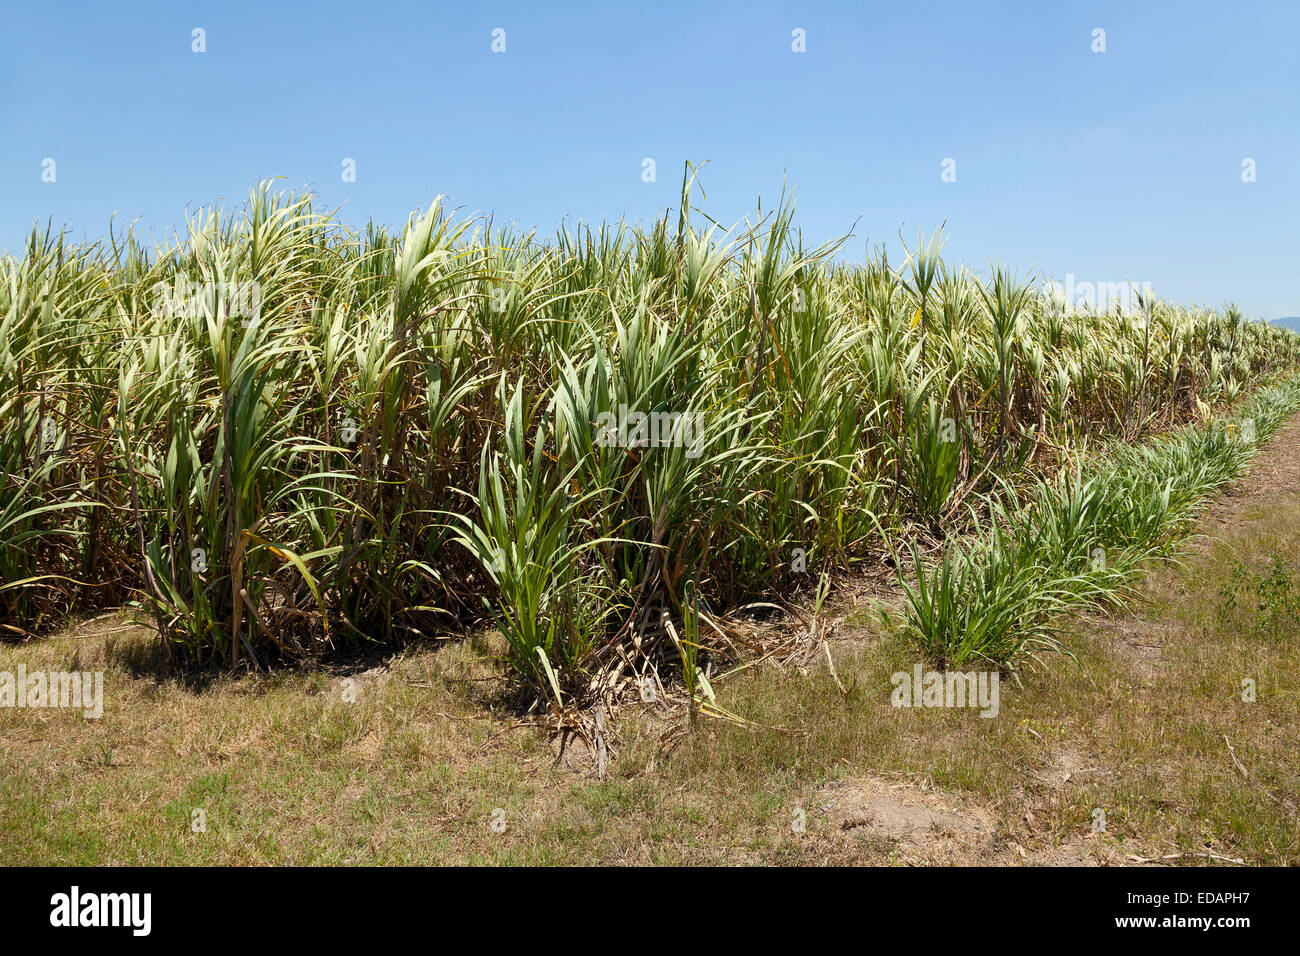 Sugarcane fields in Queensland, Australia Stock Photo